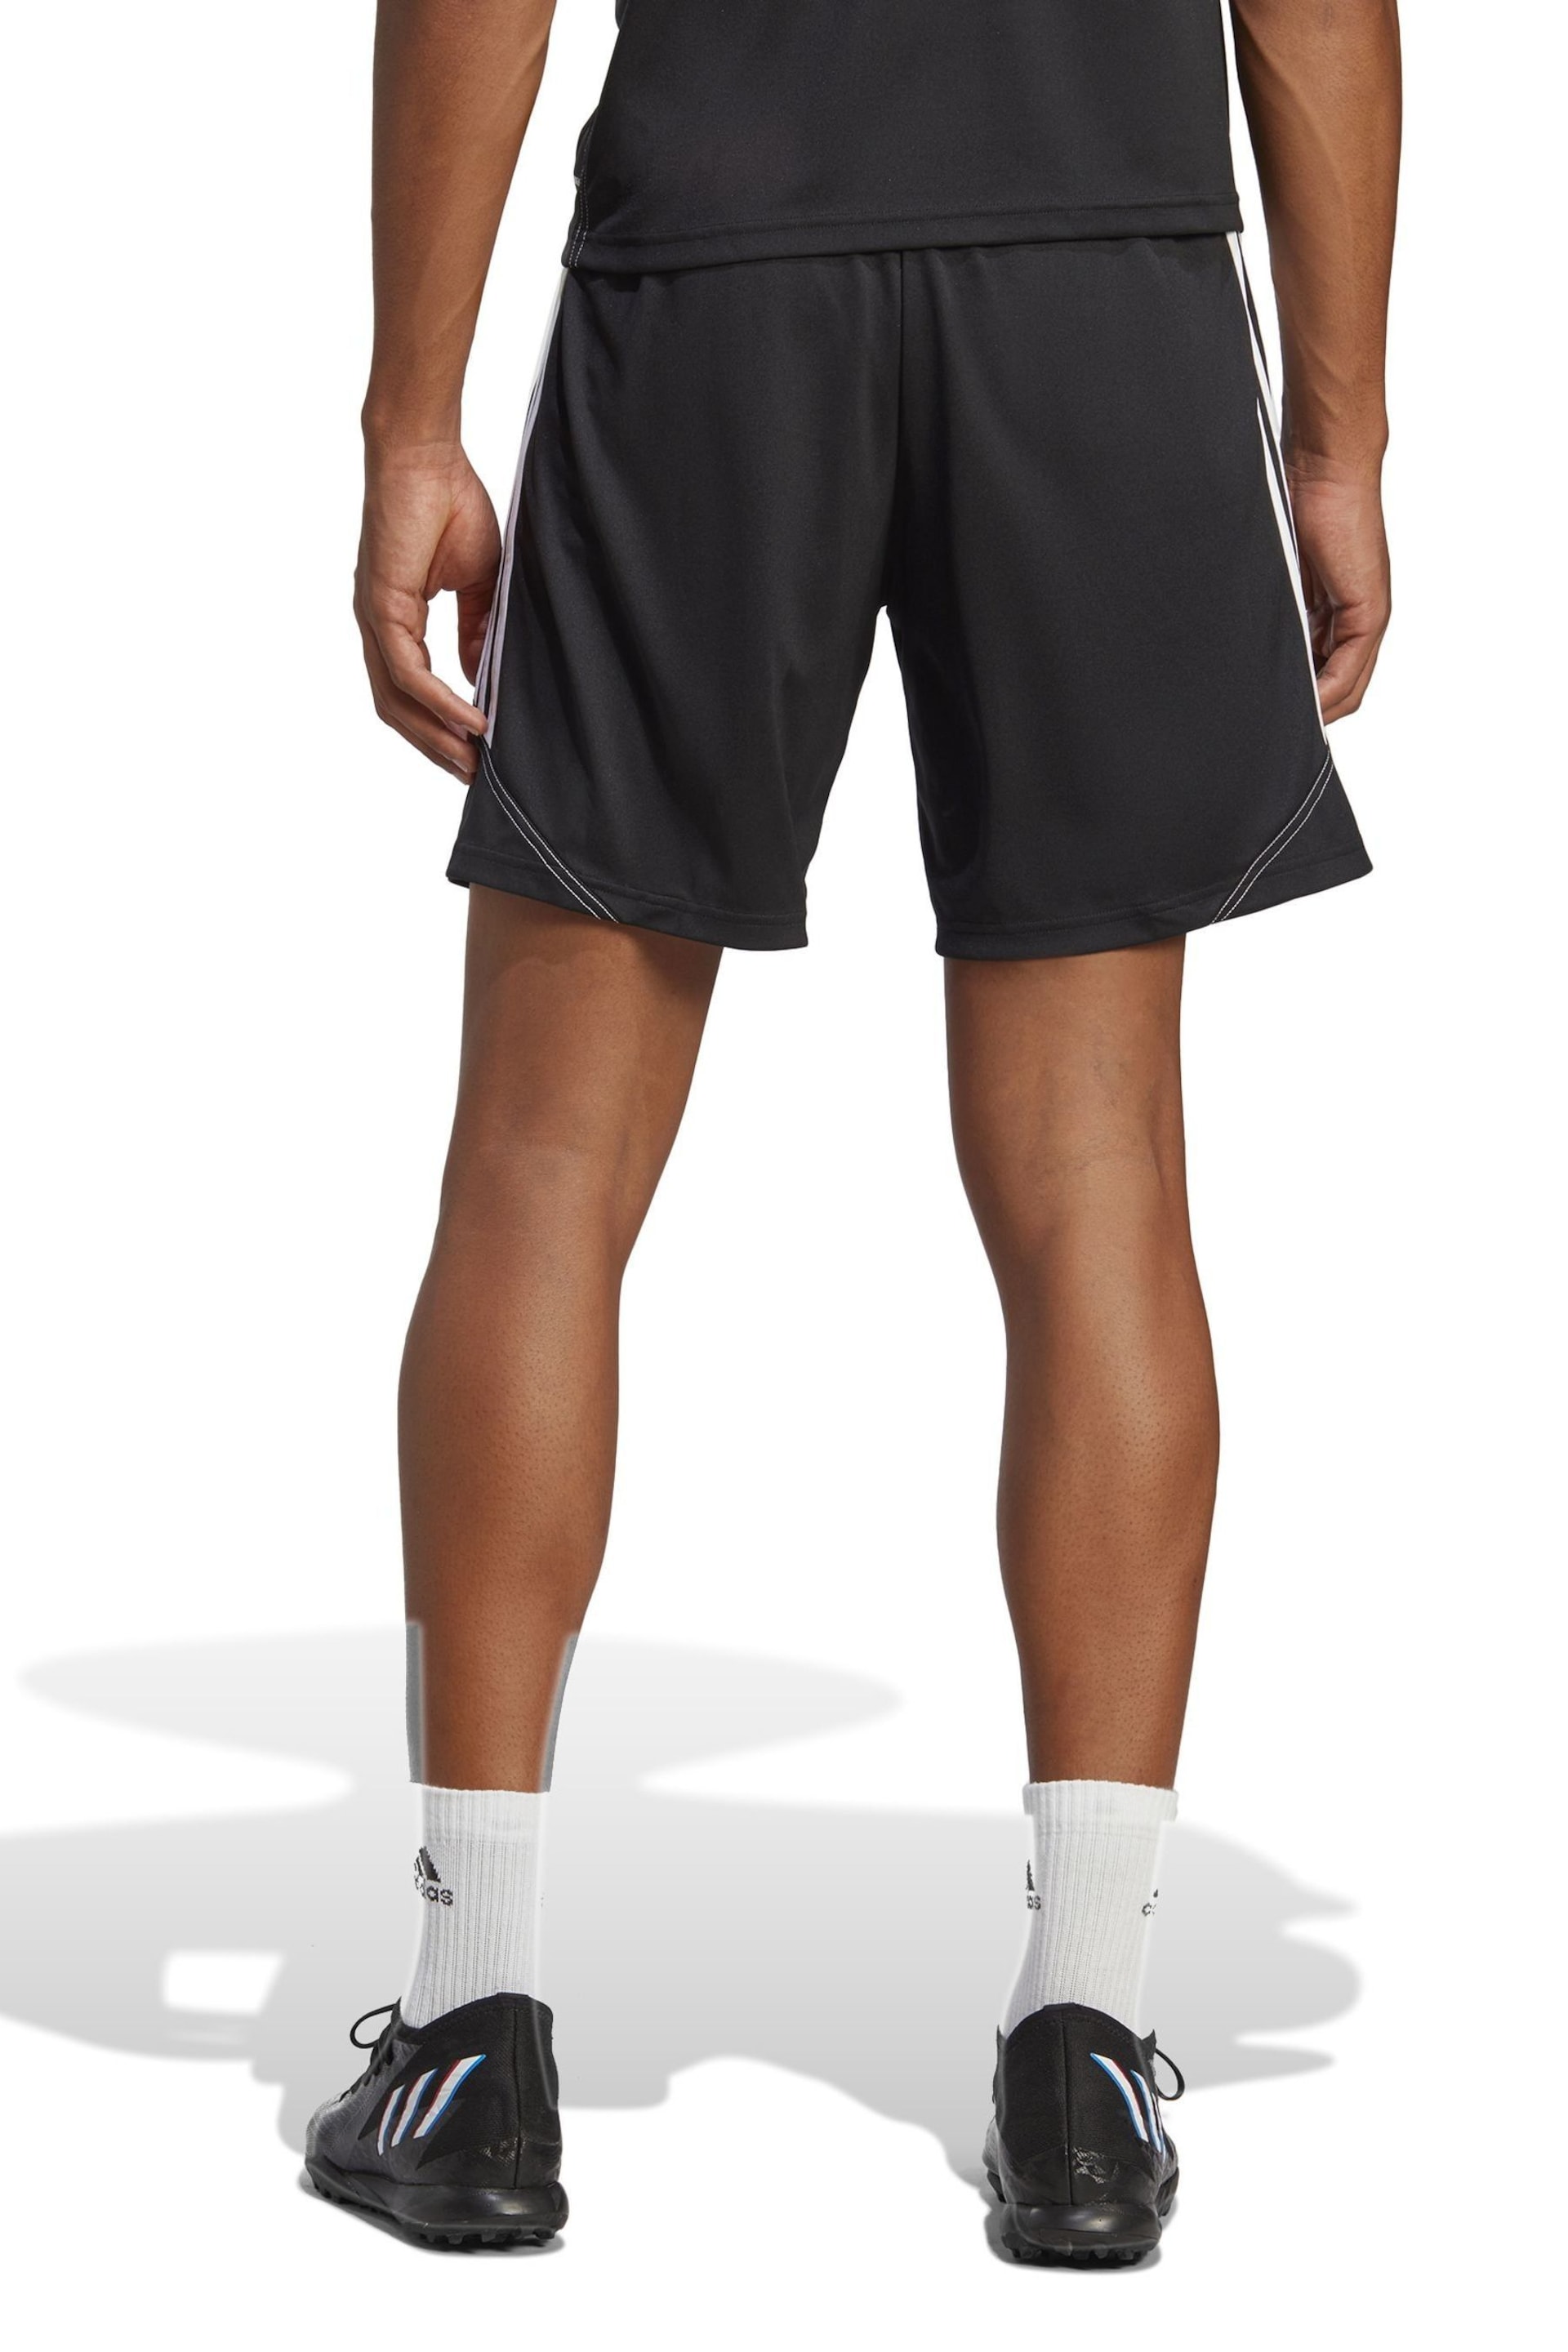 adidas Black Tiro 23 Club Training Shorts - Image 2 of 6